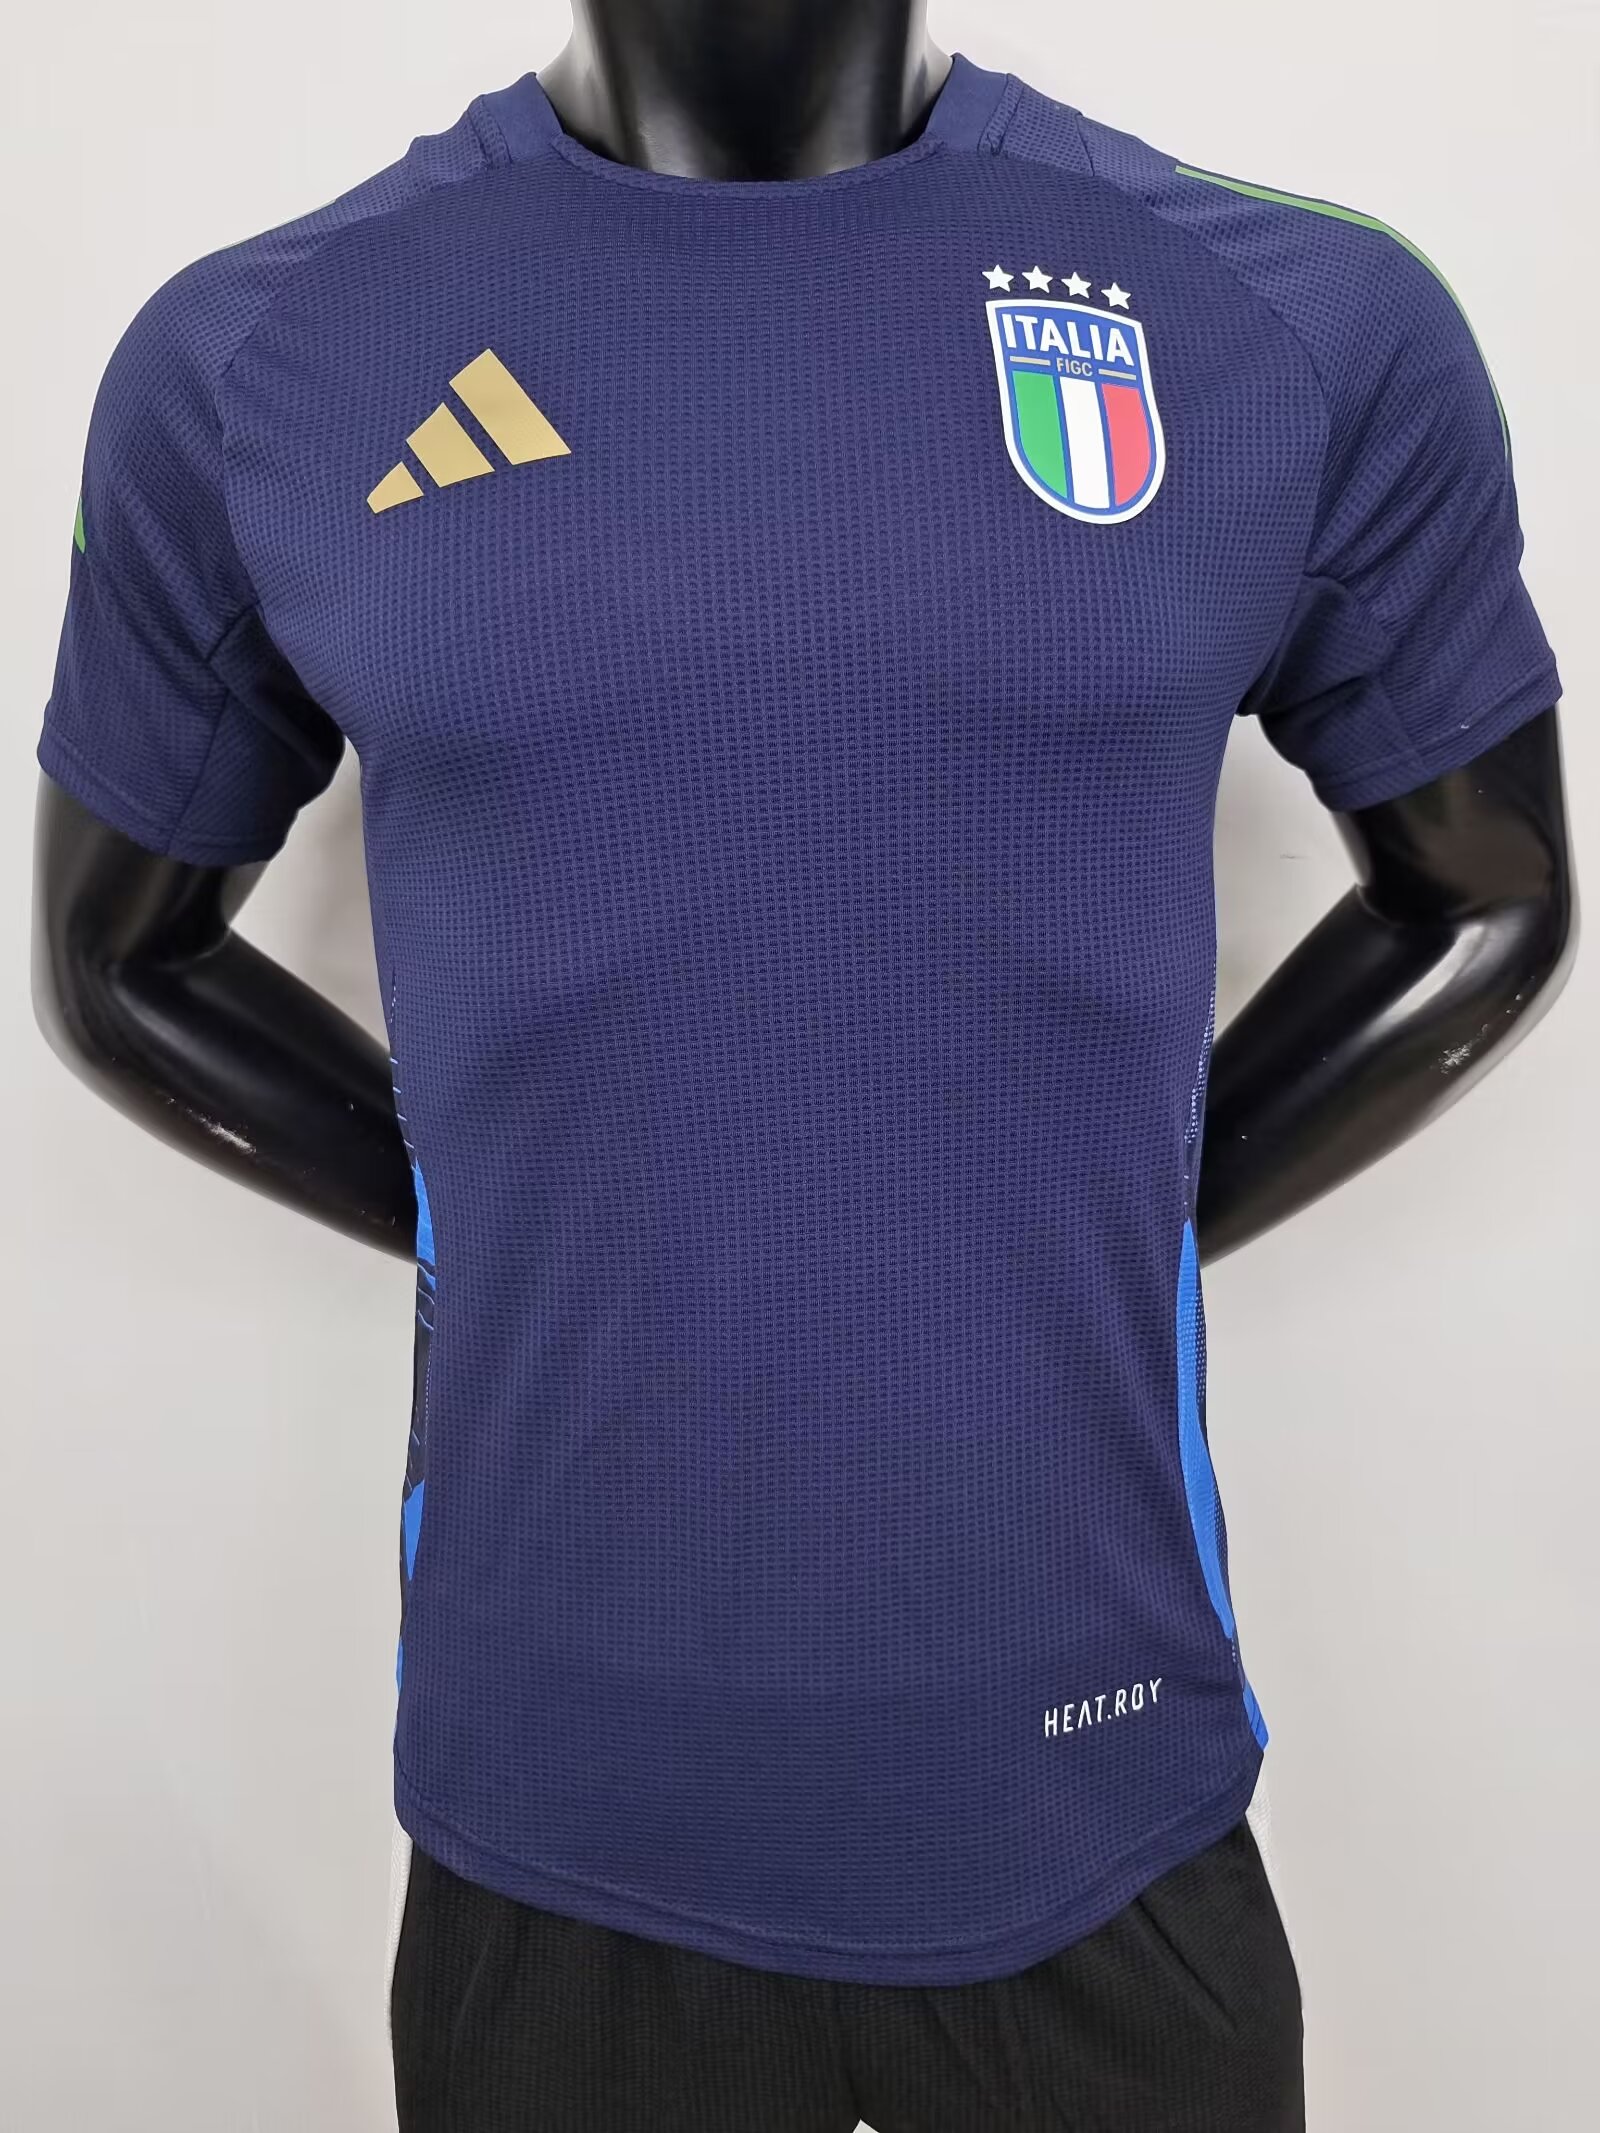 Player Version 24/25 Italy Training uniform royal blue